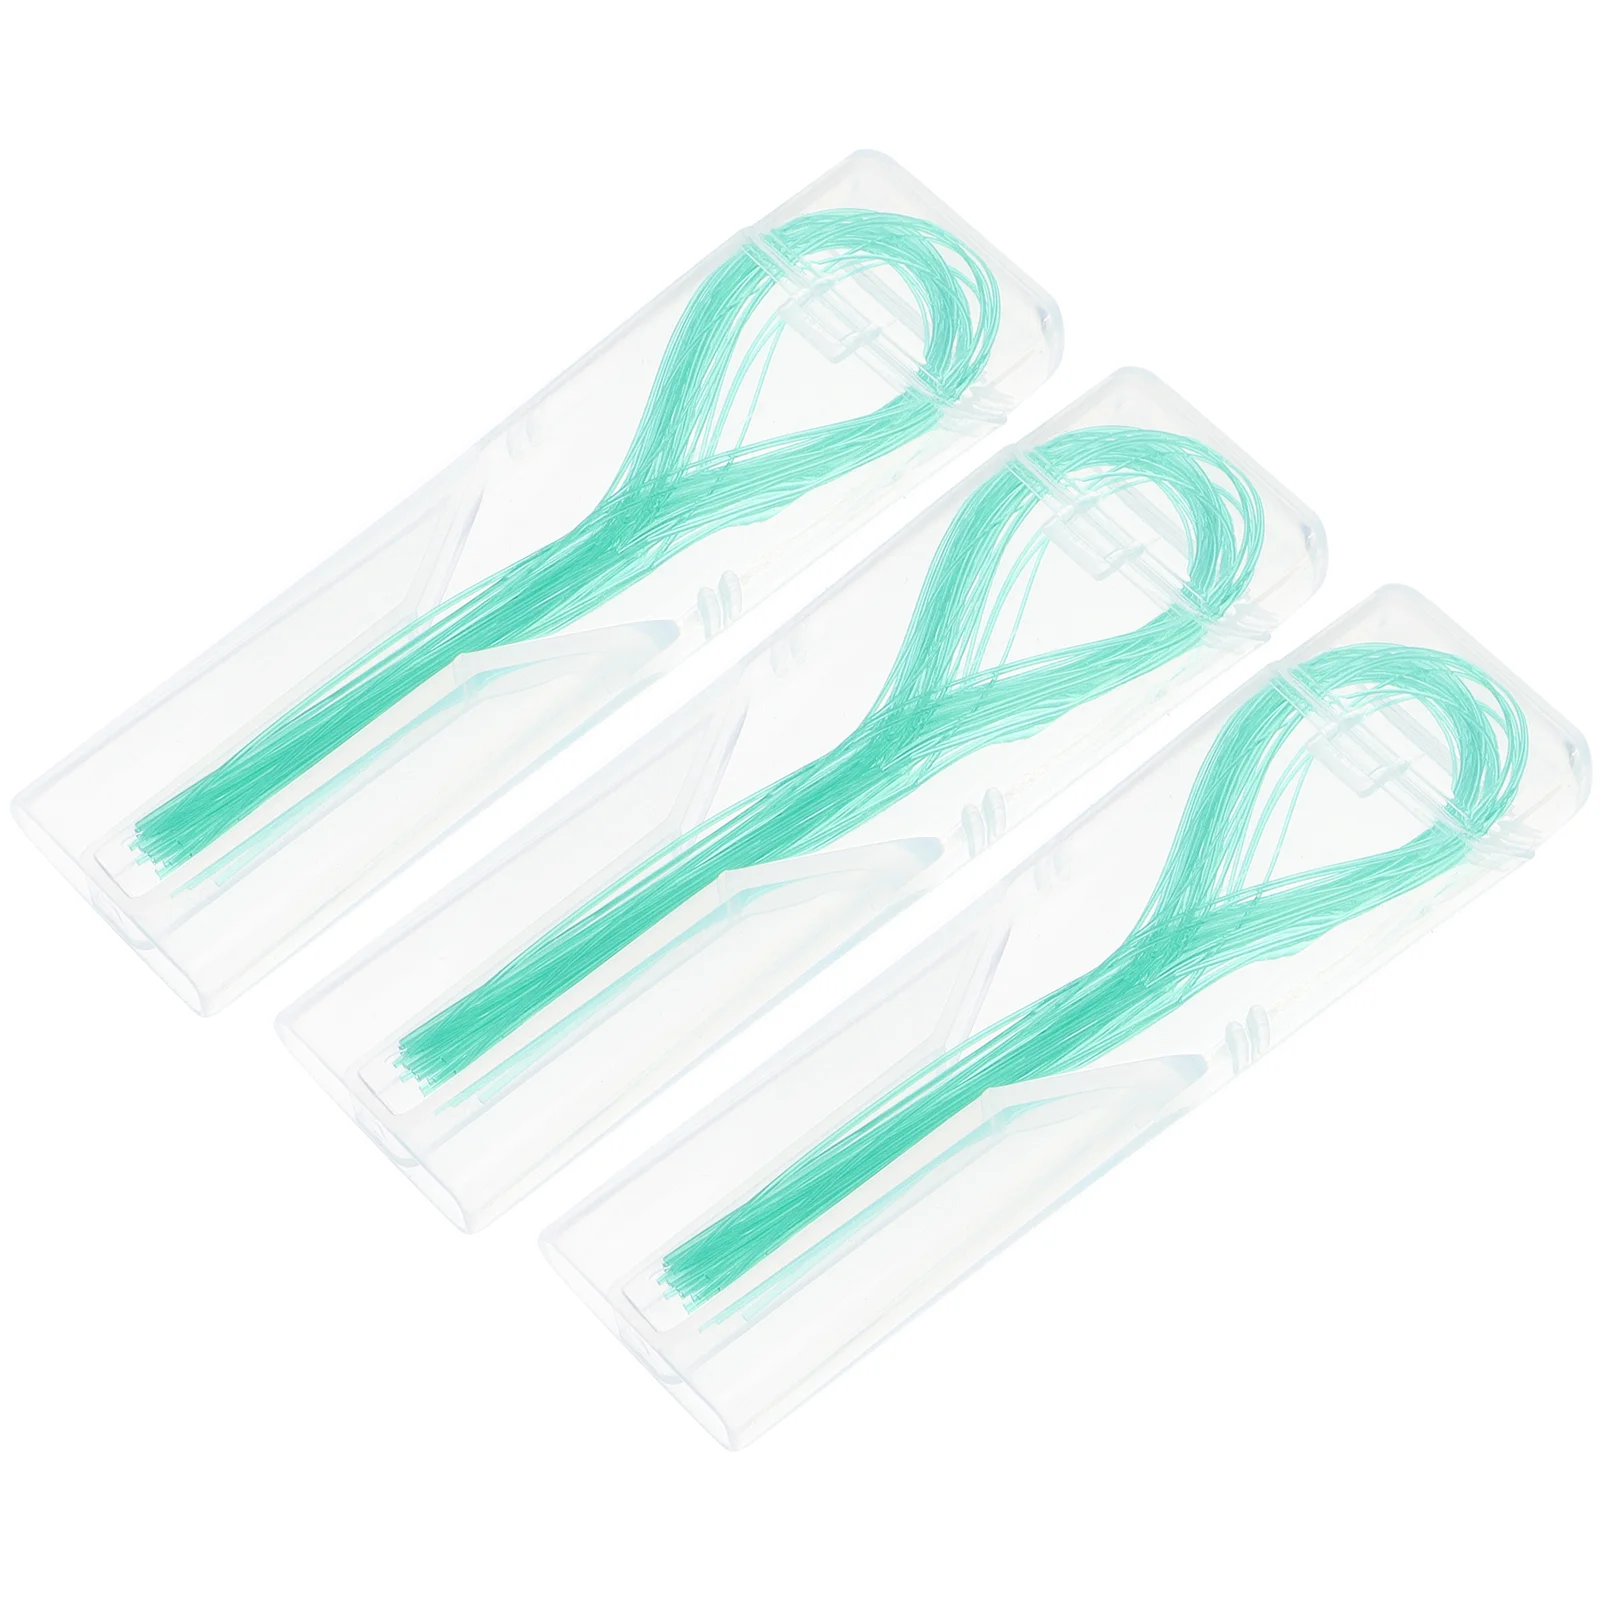 

105 Pcs Dental Floss Threading Threaders Teeth Cleaning Toys Bridges Nylon Professional